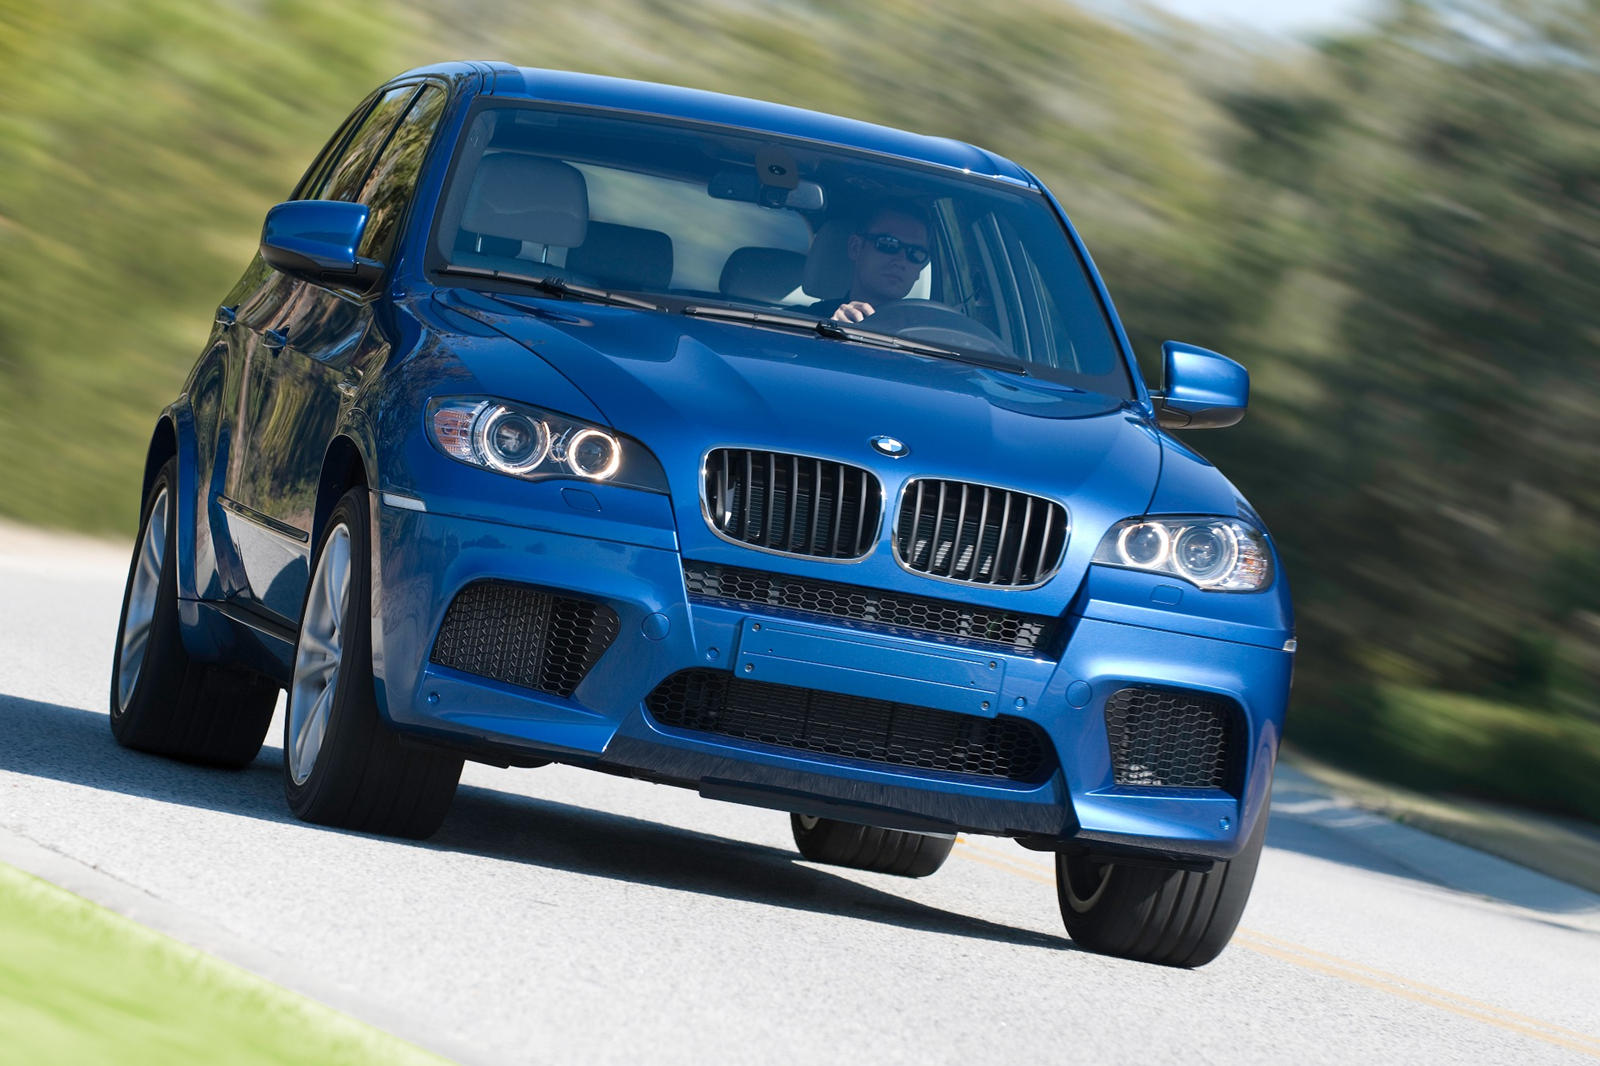 BMW Automotor Puerto Banús presents its new X5 model to Luks